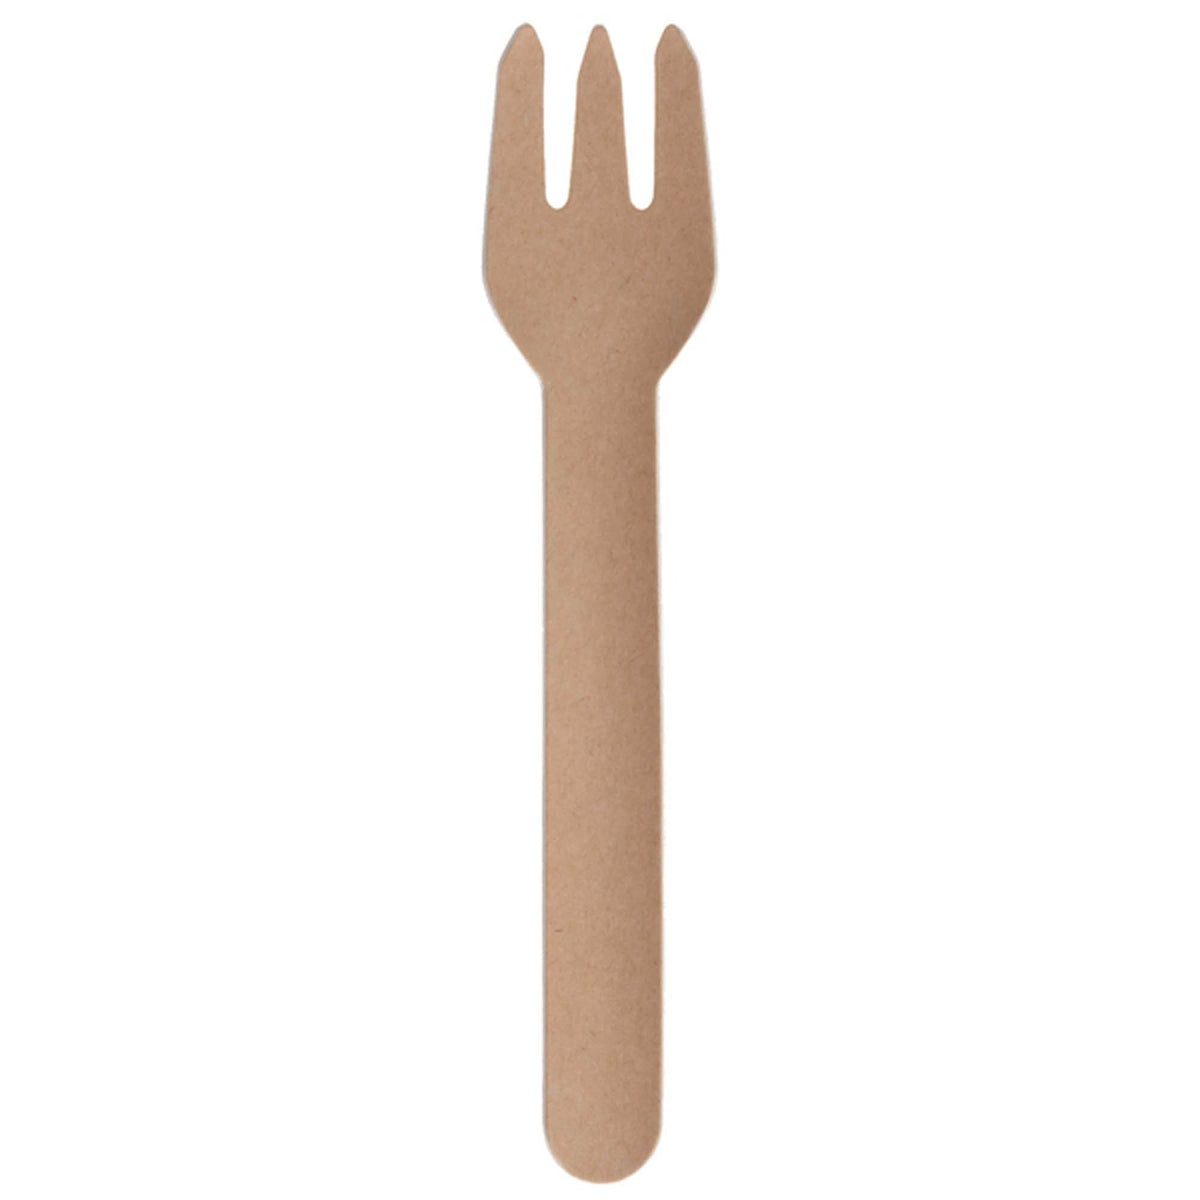 SANTEX Disposable-Plasticware Kraft ECO Paper Forks, 10 Count 3660380097754